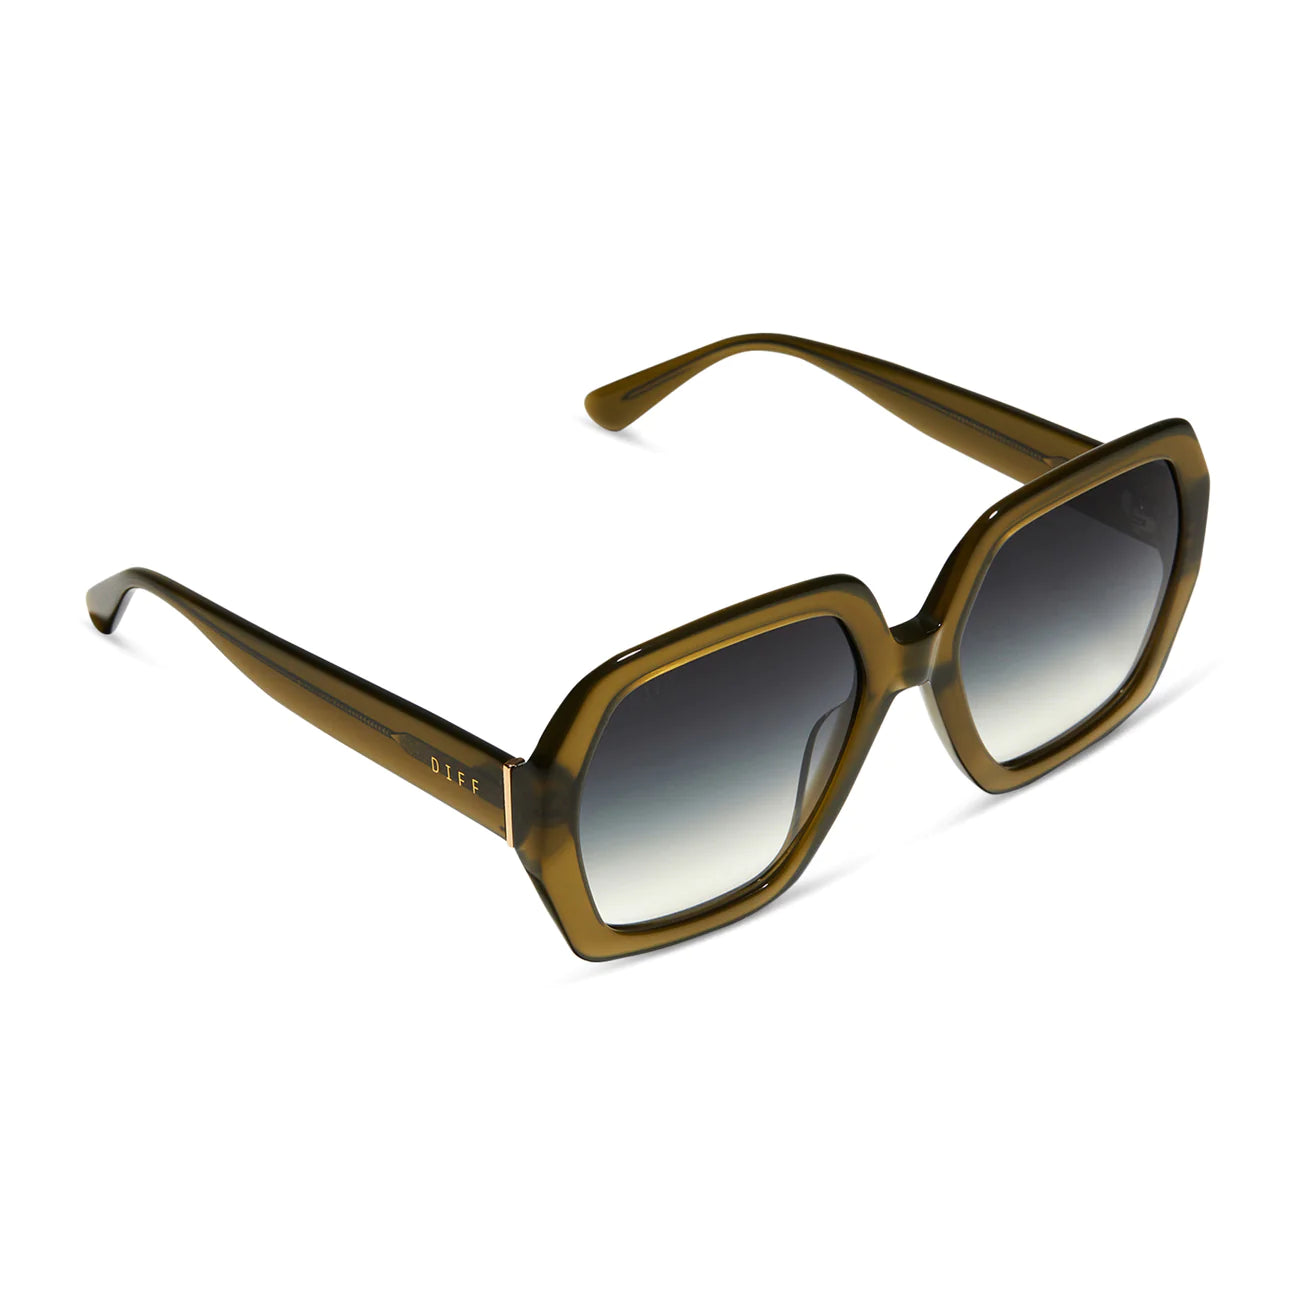 Nola Rich Olive Sunglasses